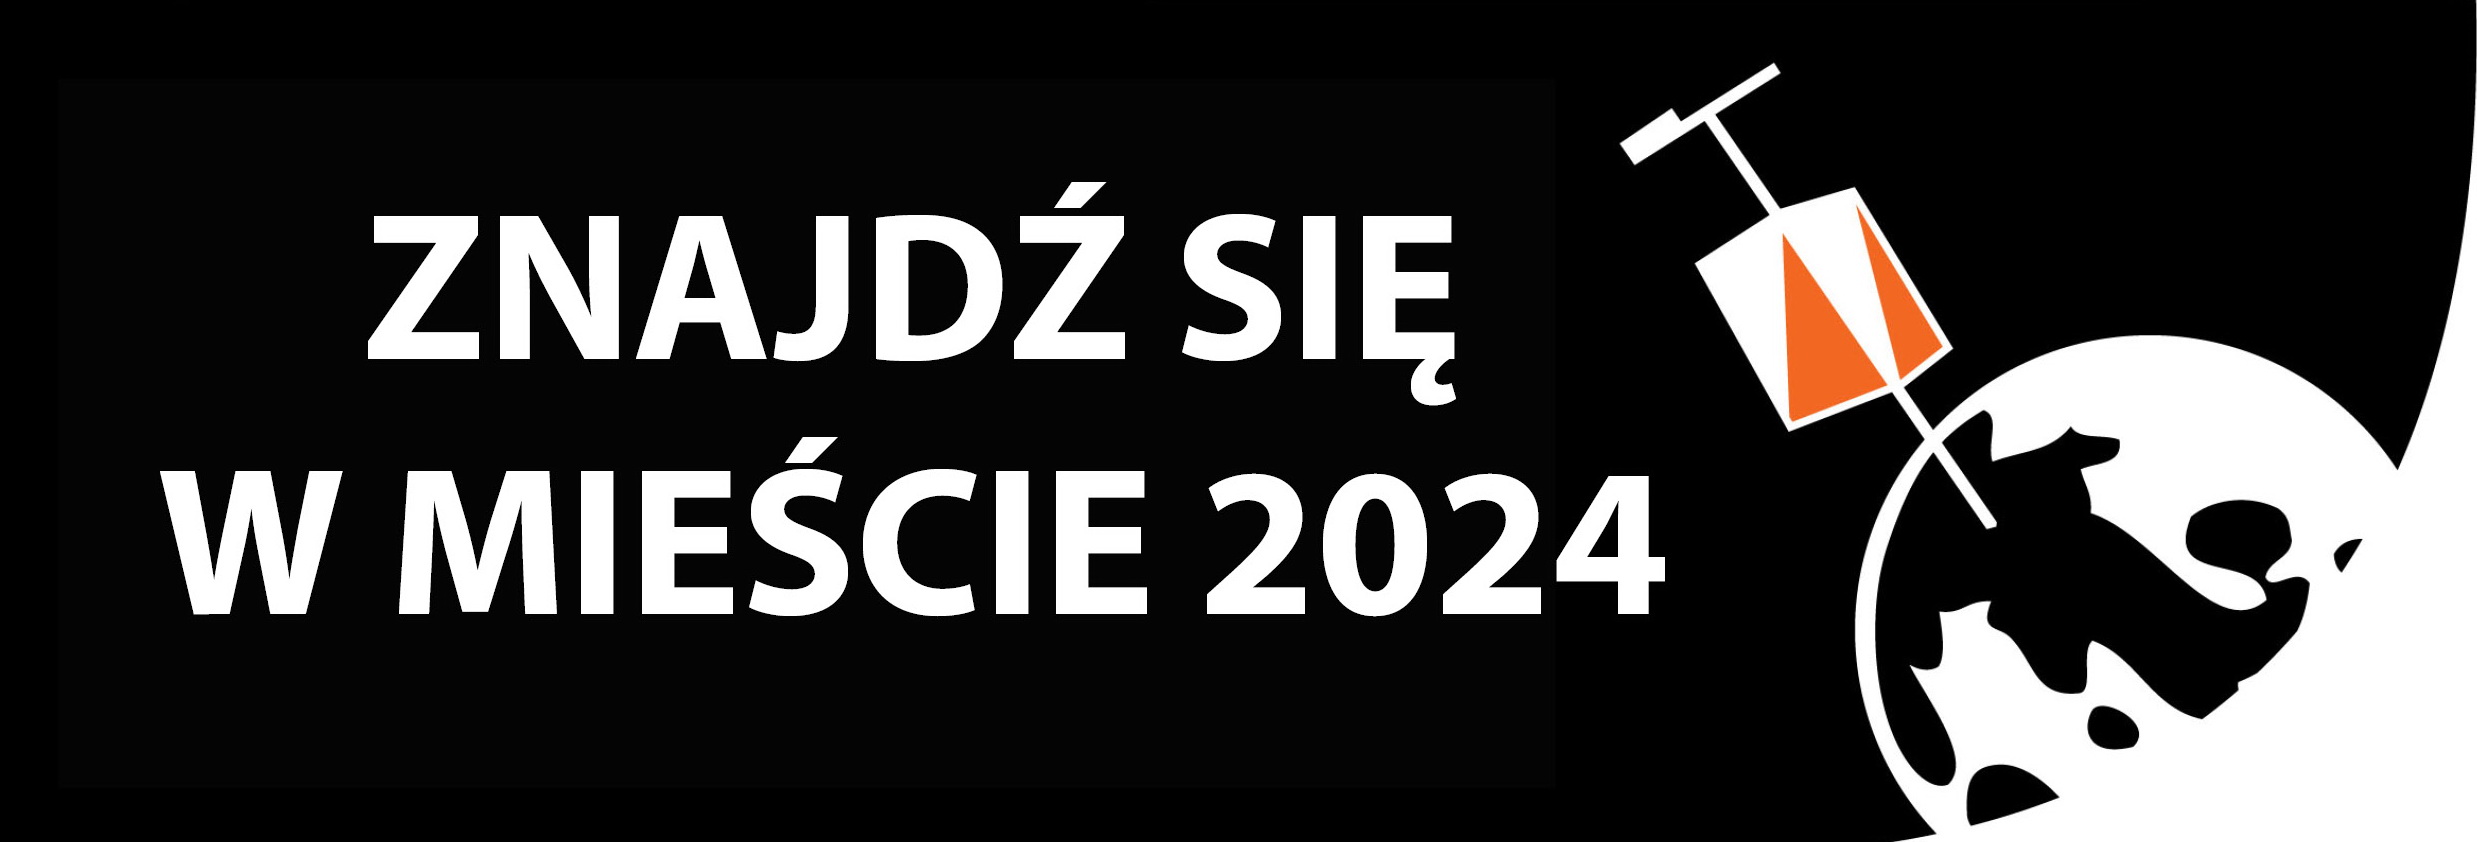 ZSWM 2024 logo